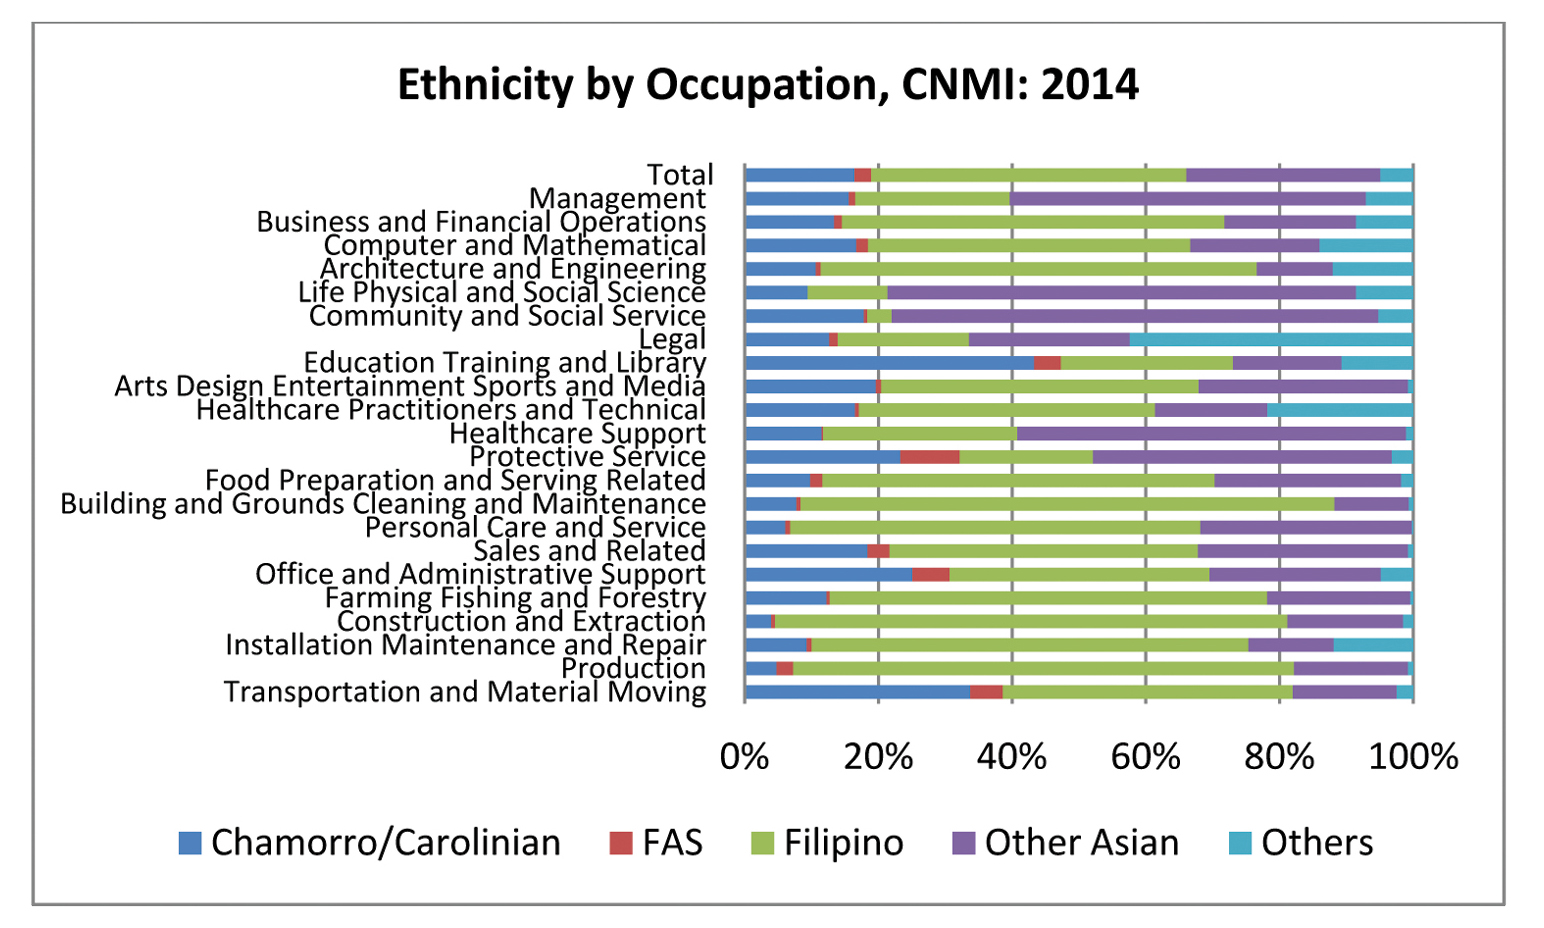 EthnicityByOccupation